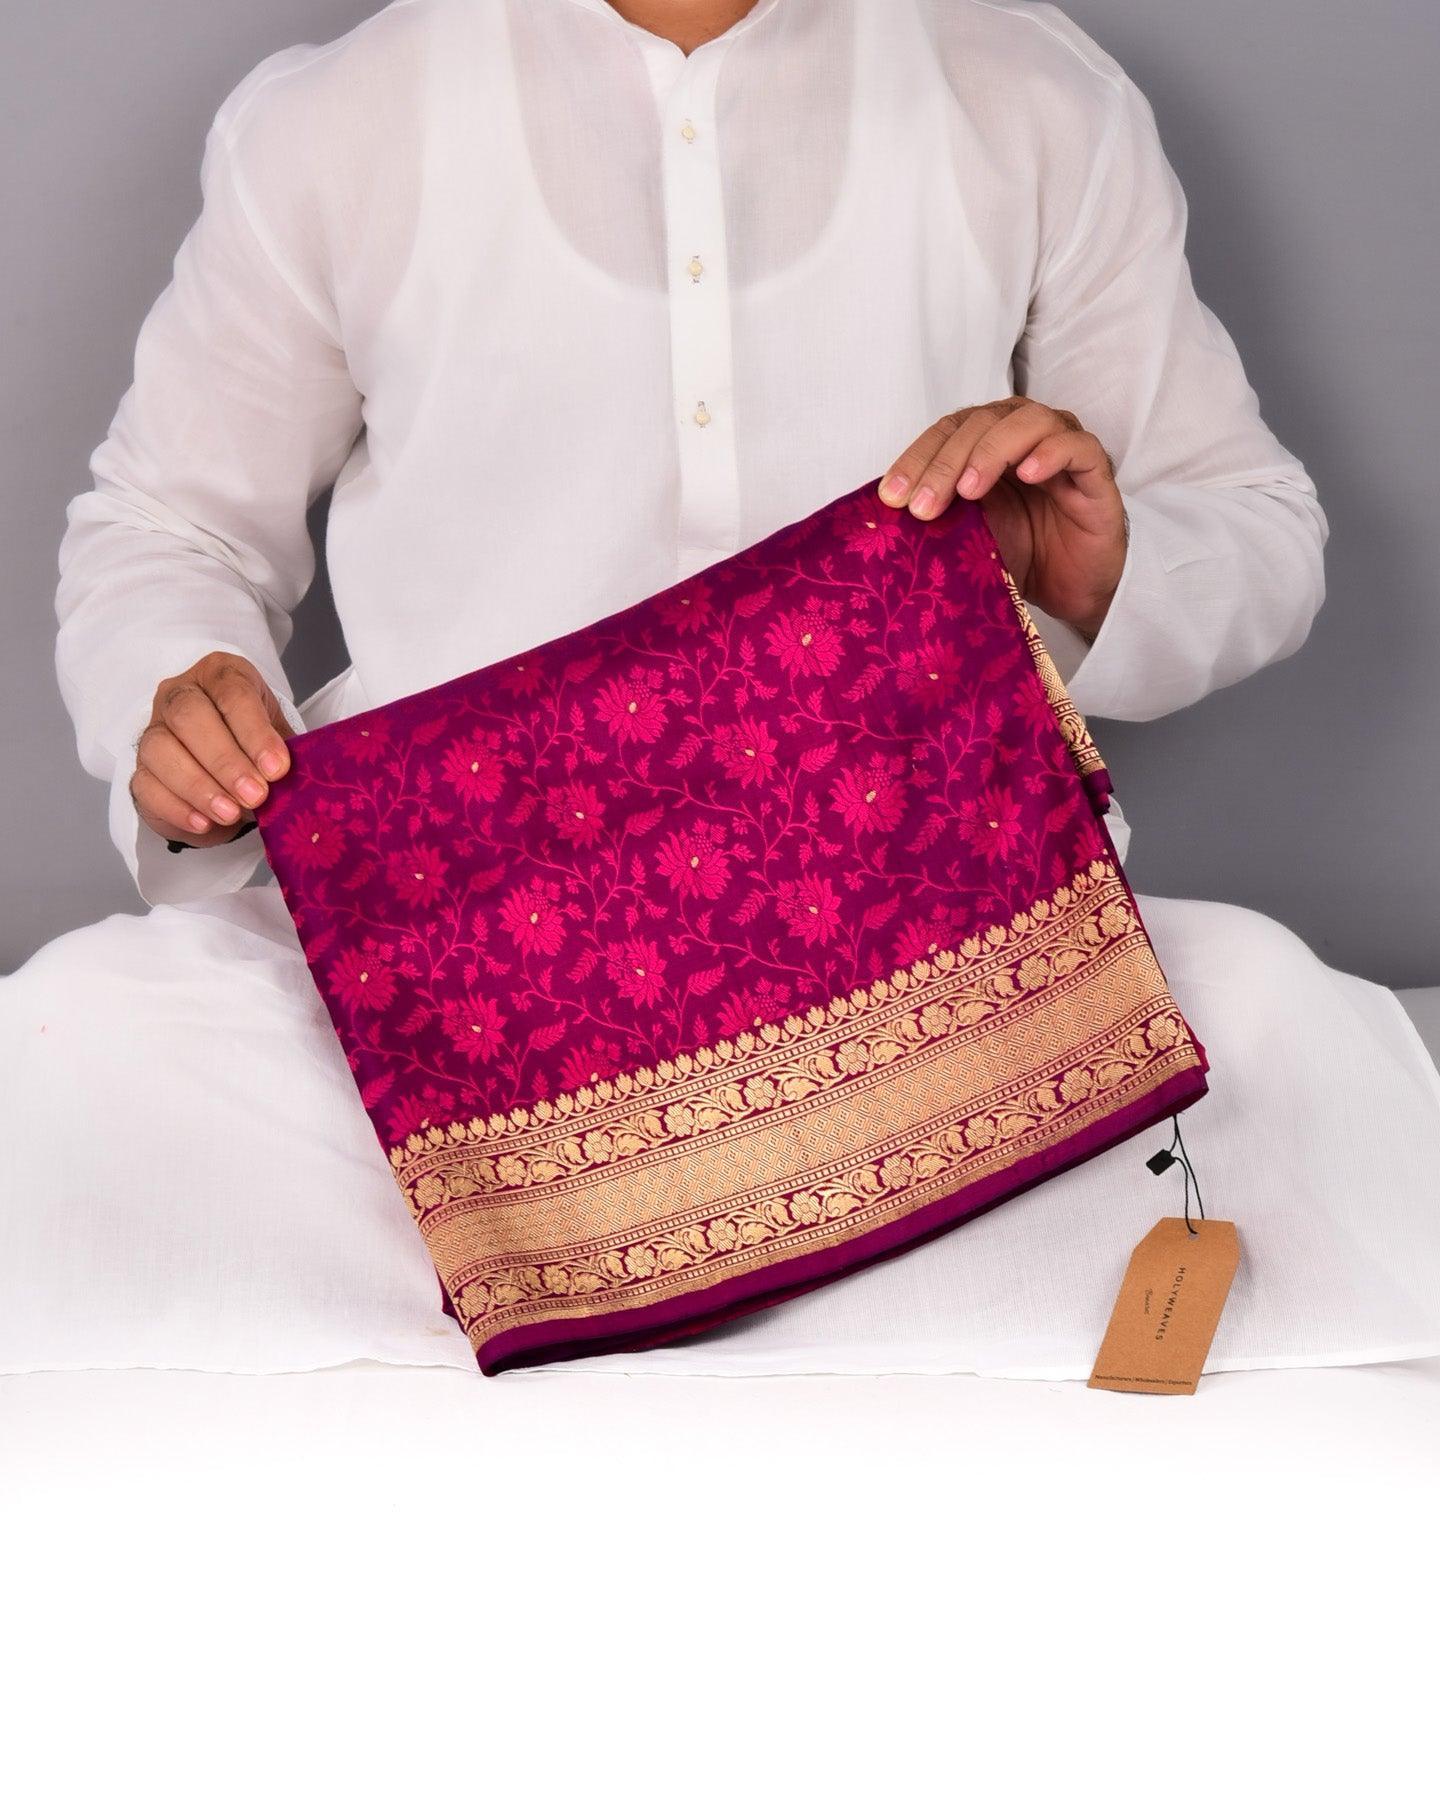 Pink On Magenta Banarasi Zari Buti Tanchoi Brocade Handwoven Katan Silk Saree - By HolyWeaves, Benares